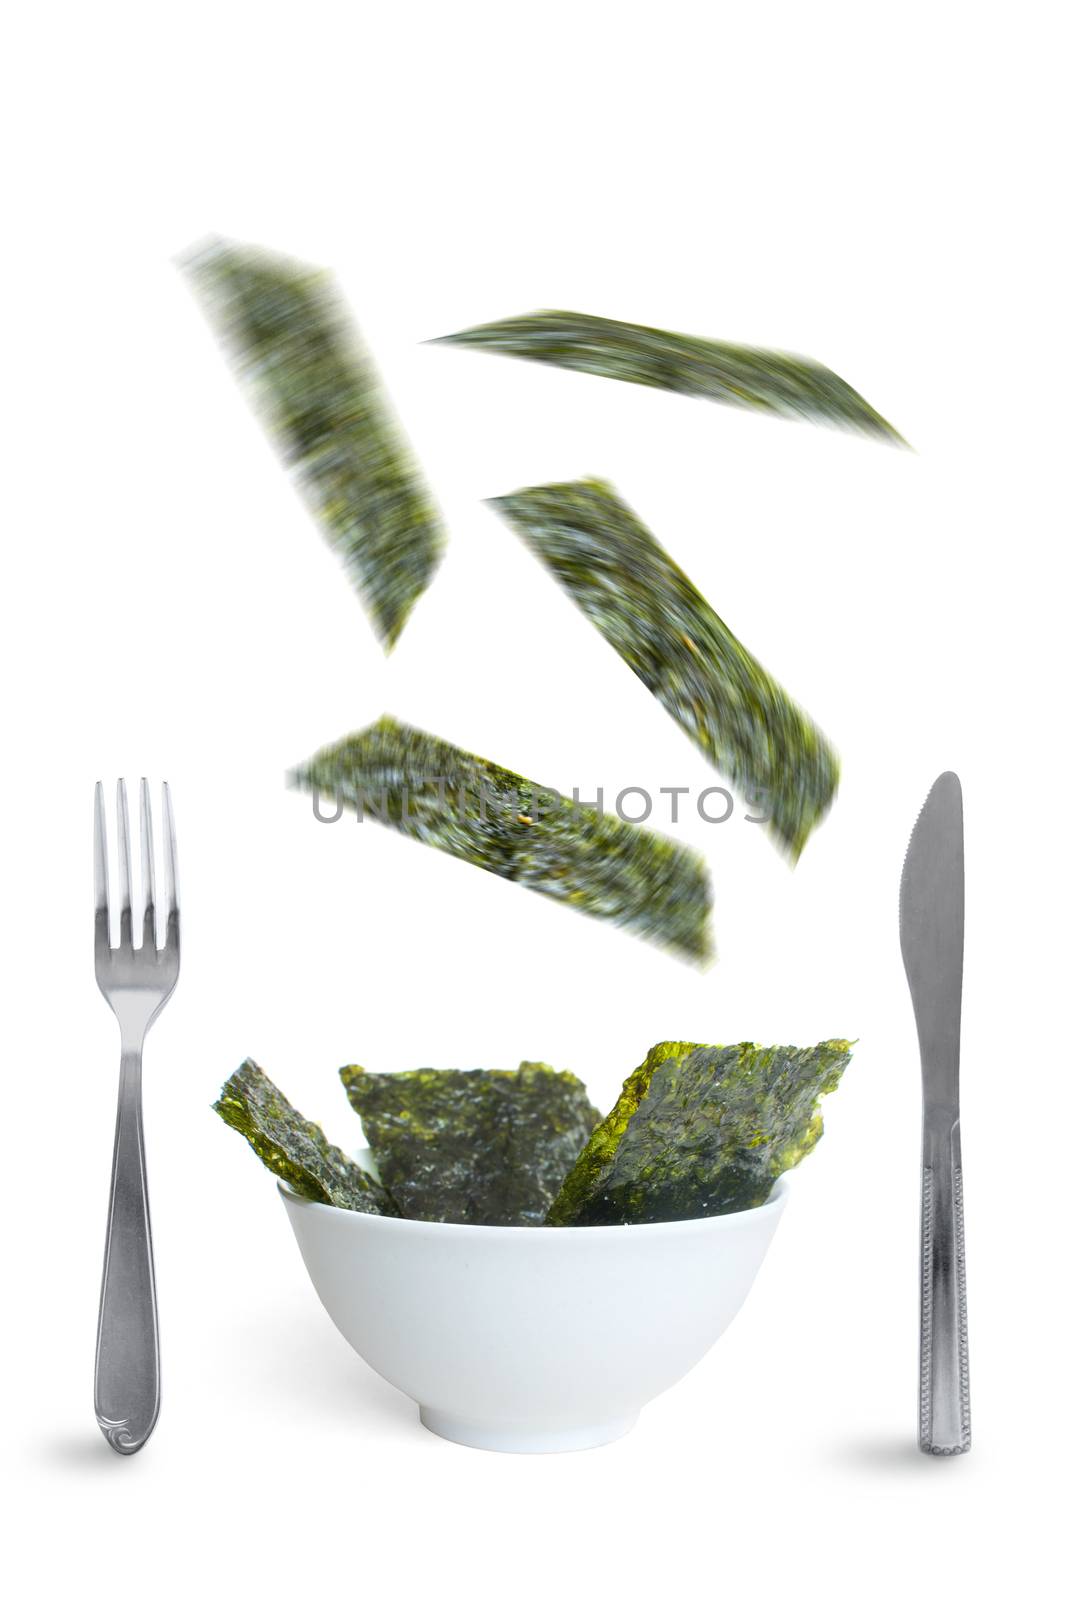 Seaweed superfood by unikpix